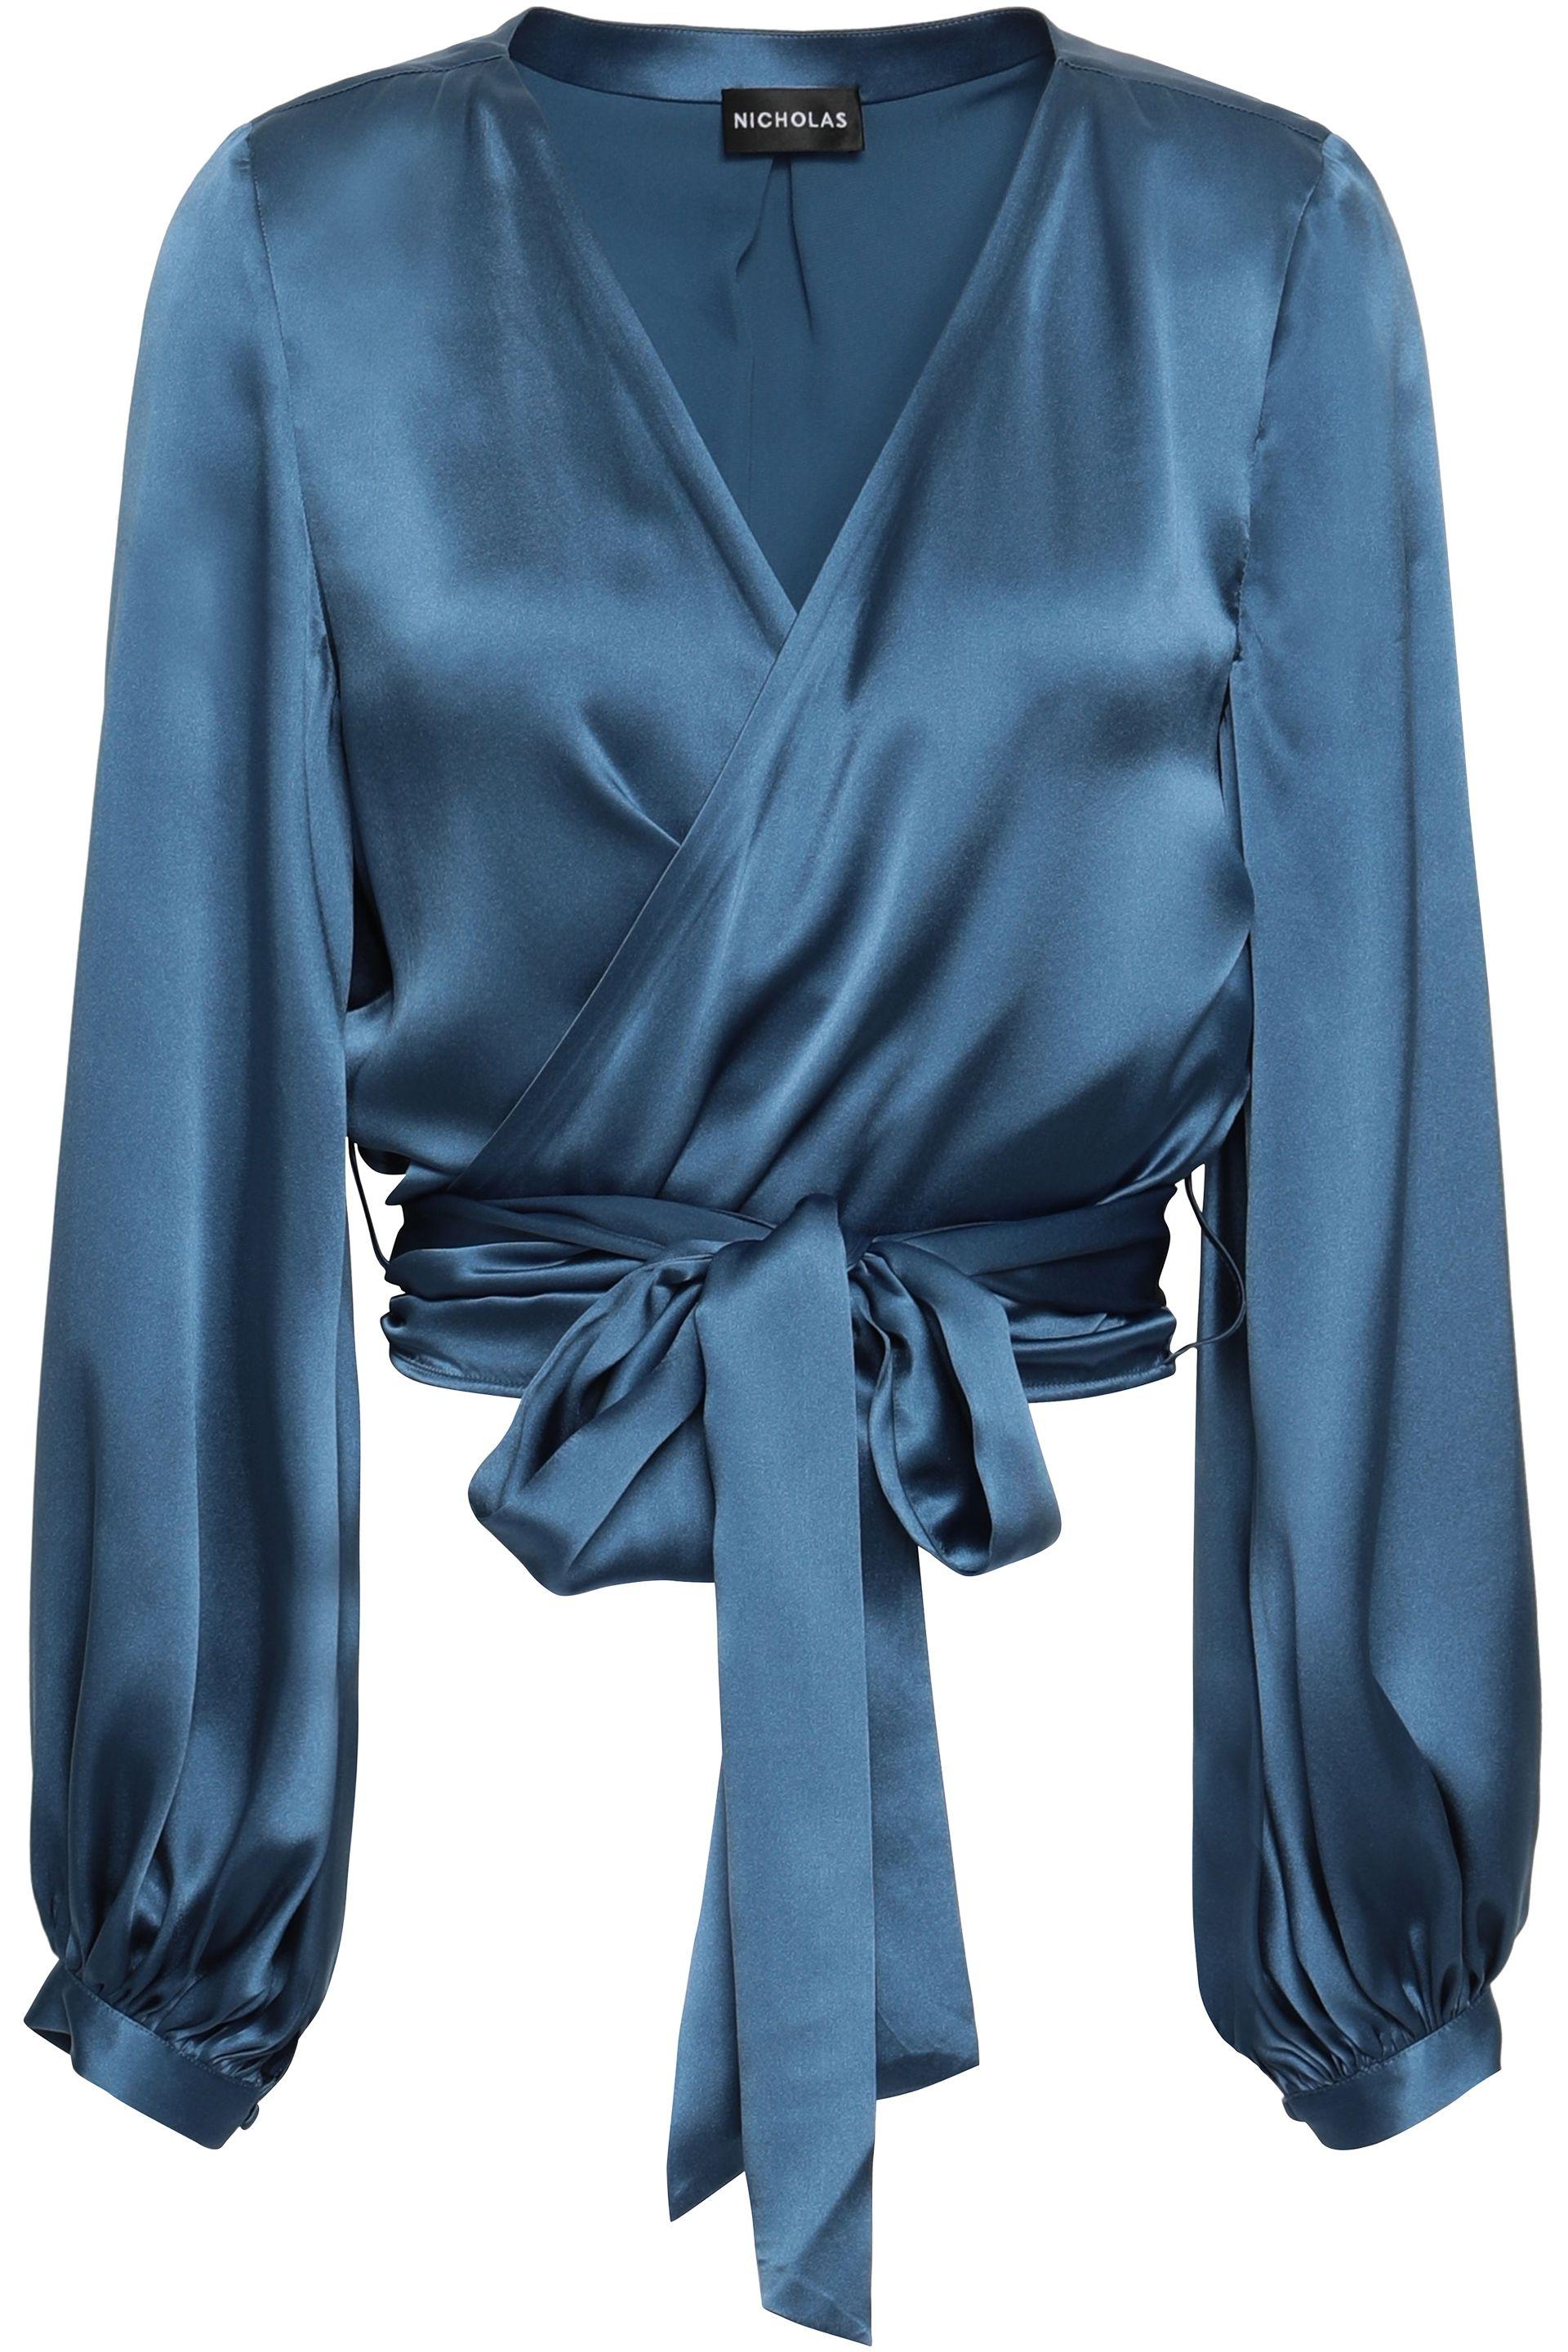 Nicholas Silk-charmeuse Wrap Top Blue | Lyst